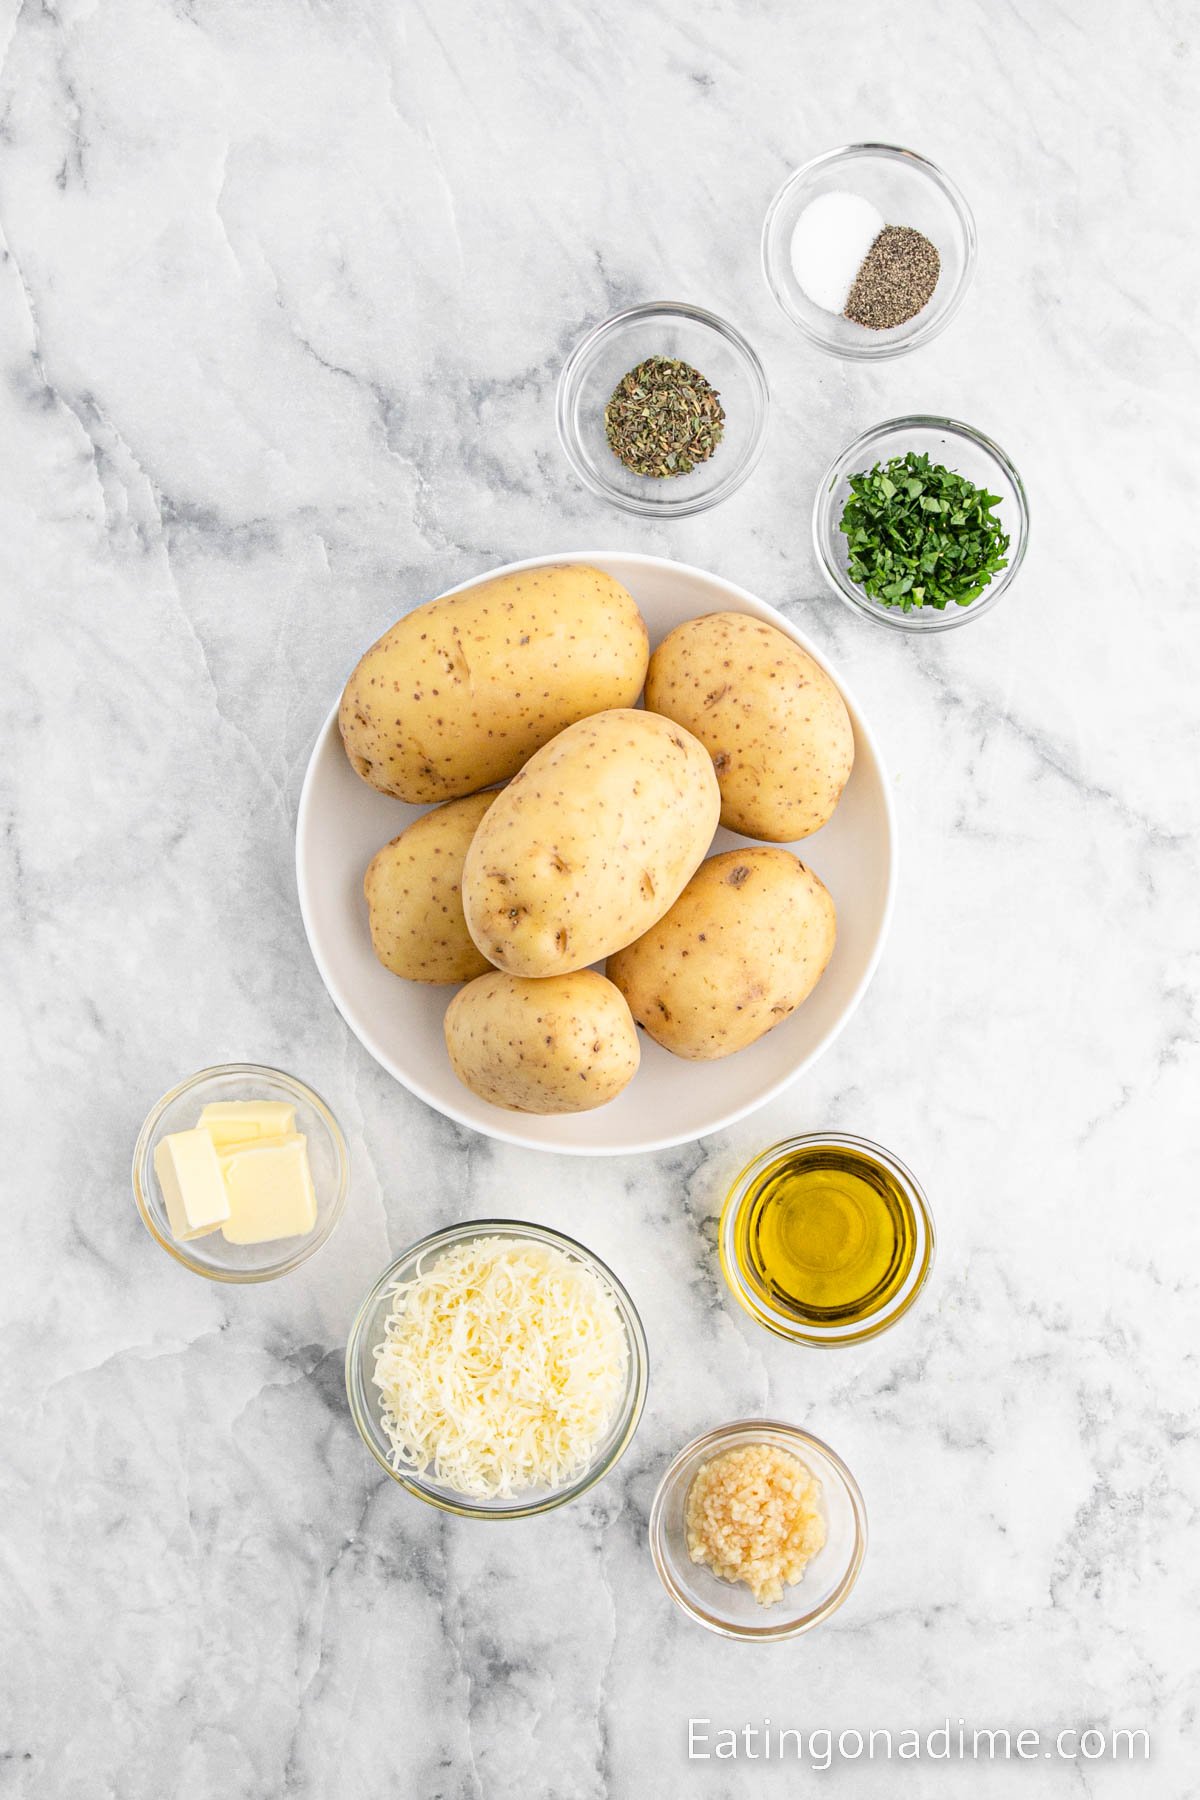 Ingredients needed for hasselback potatoes